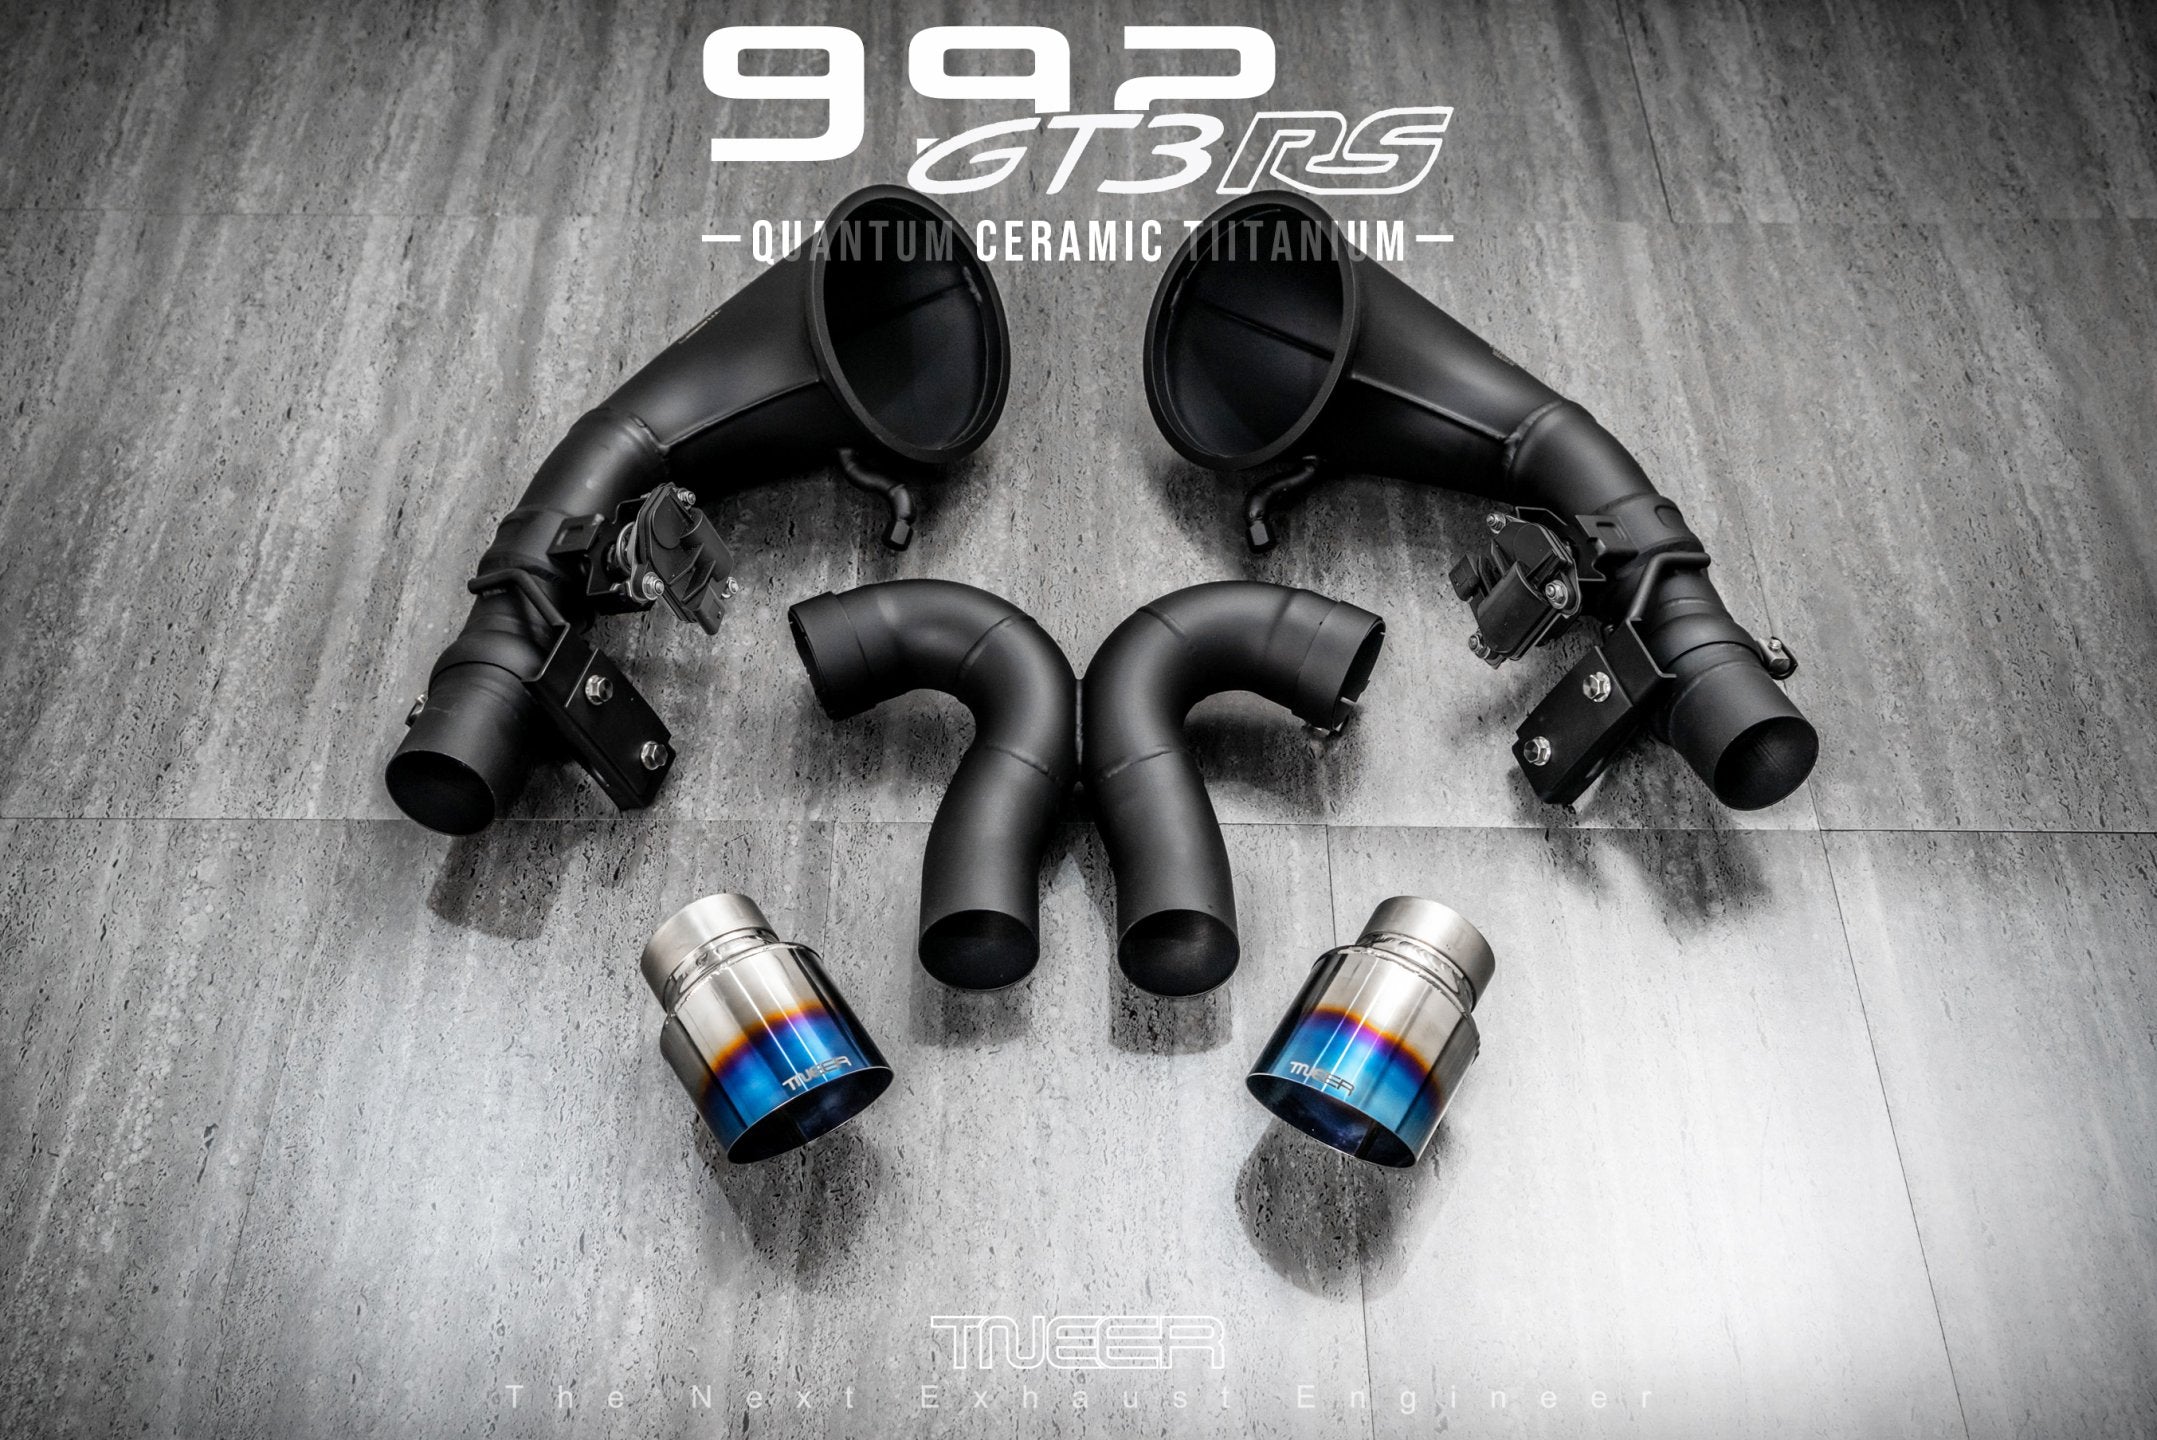 TNEER titanium exhaust system for the Porsche 911 992 GT3 &amp; GT3 RS